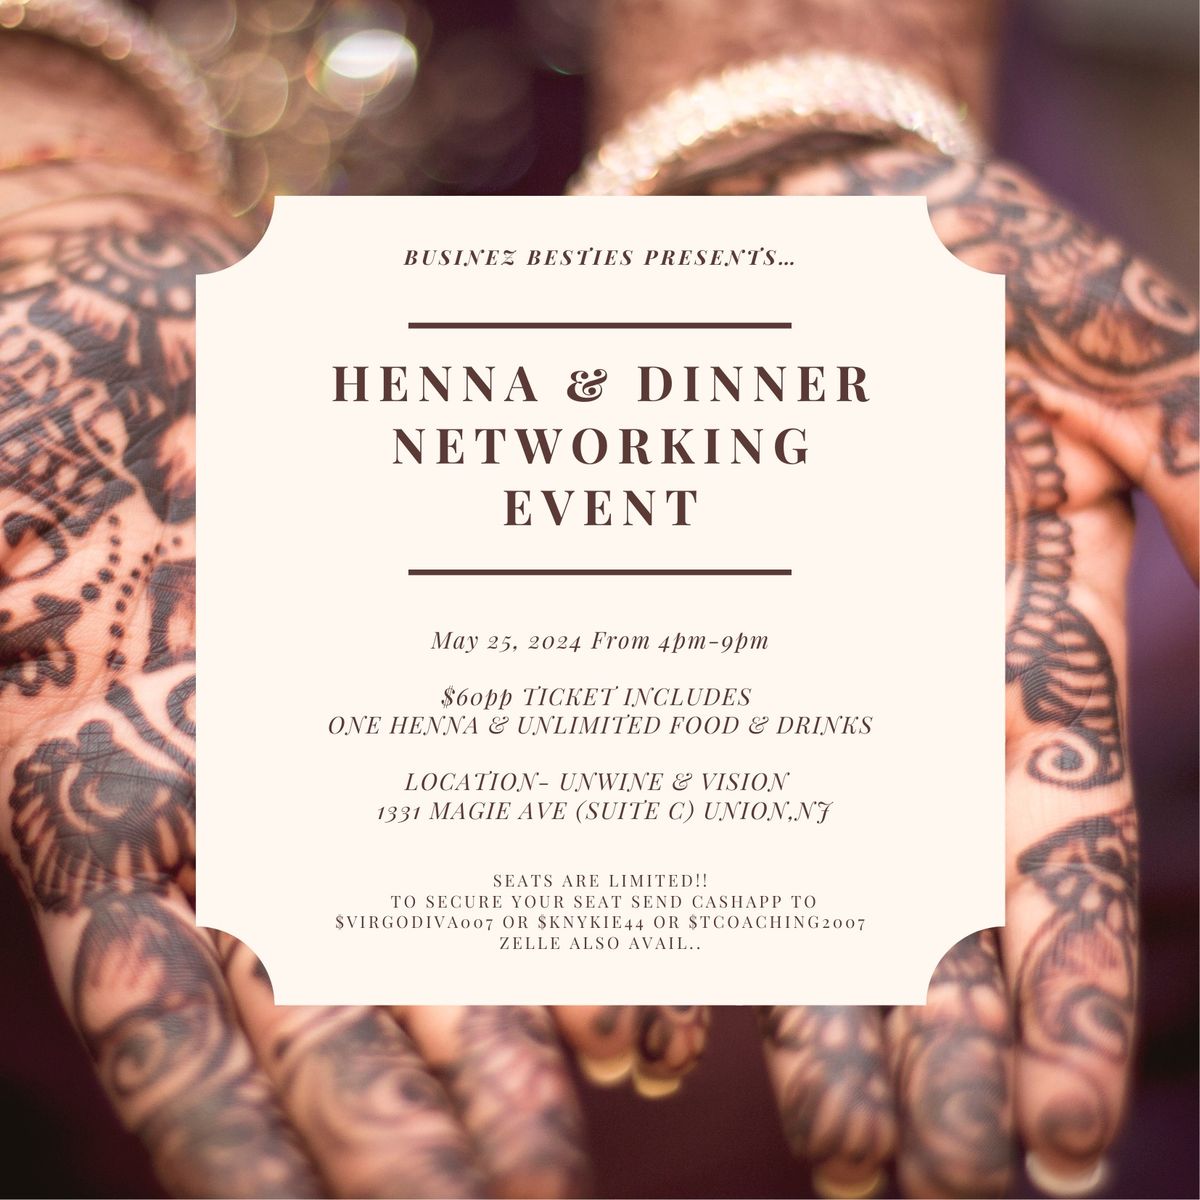 HENNA & DINNER NETWORKING EVENT